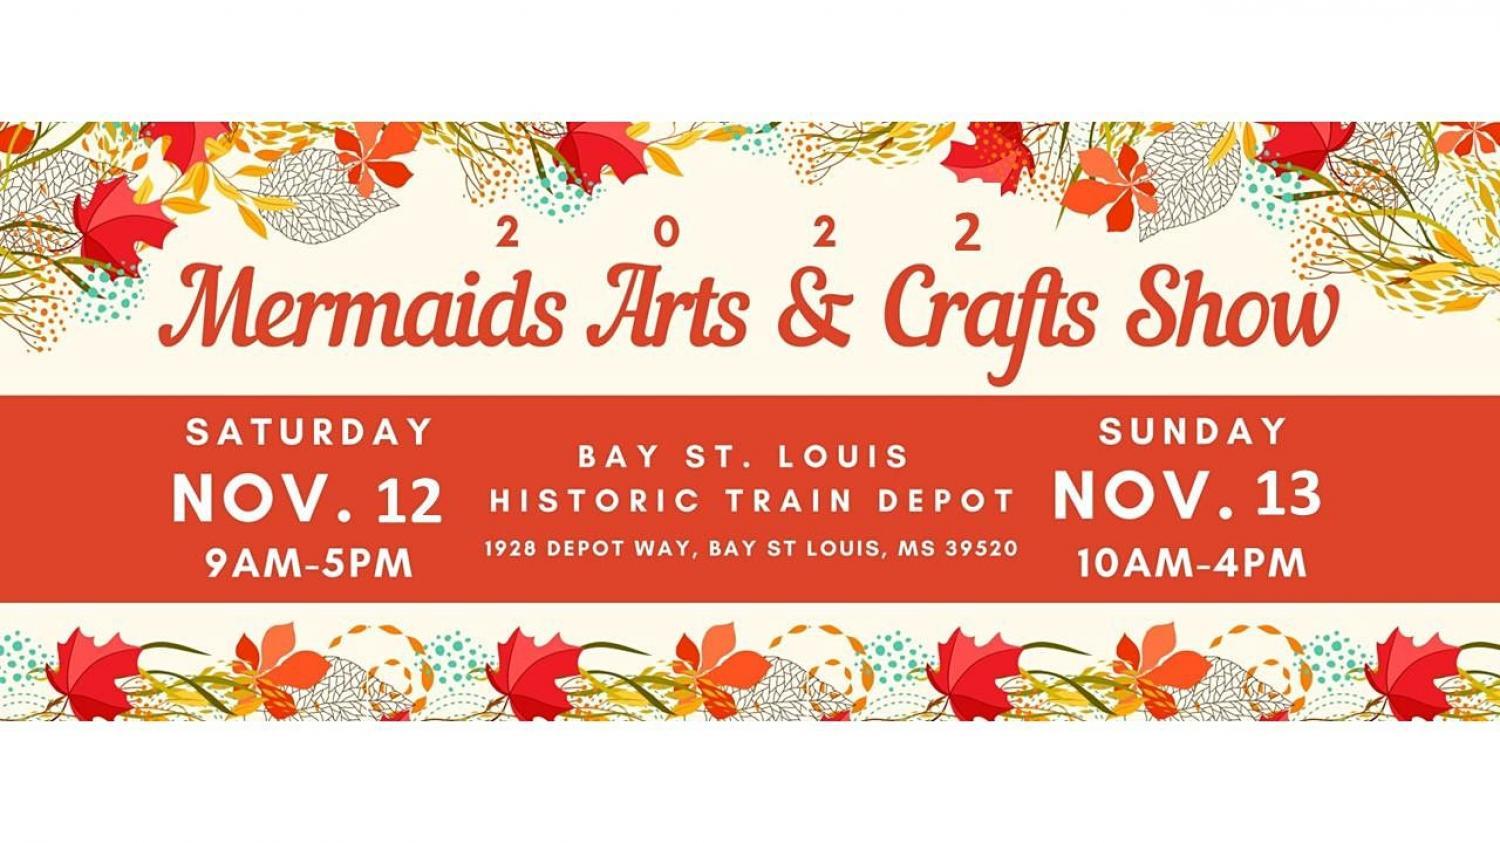 Mermaids Arts & Crafts Show
Sat Nov 12, 9:00 AM - Sun Nov 13, 4:00 PM
in 23 days